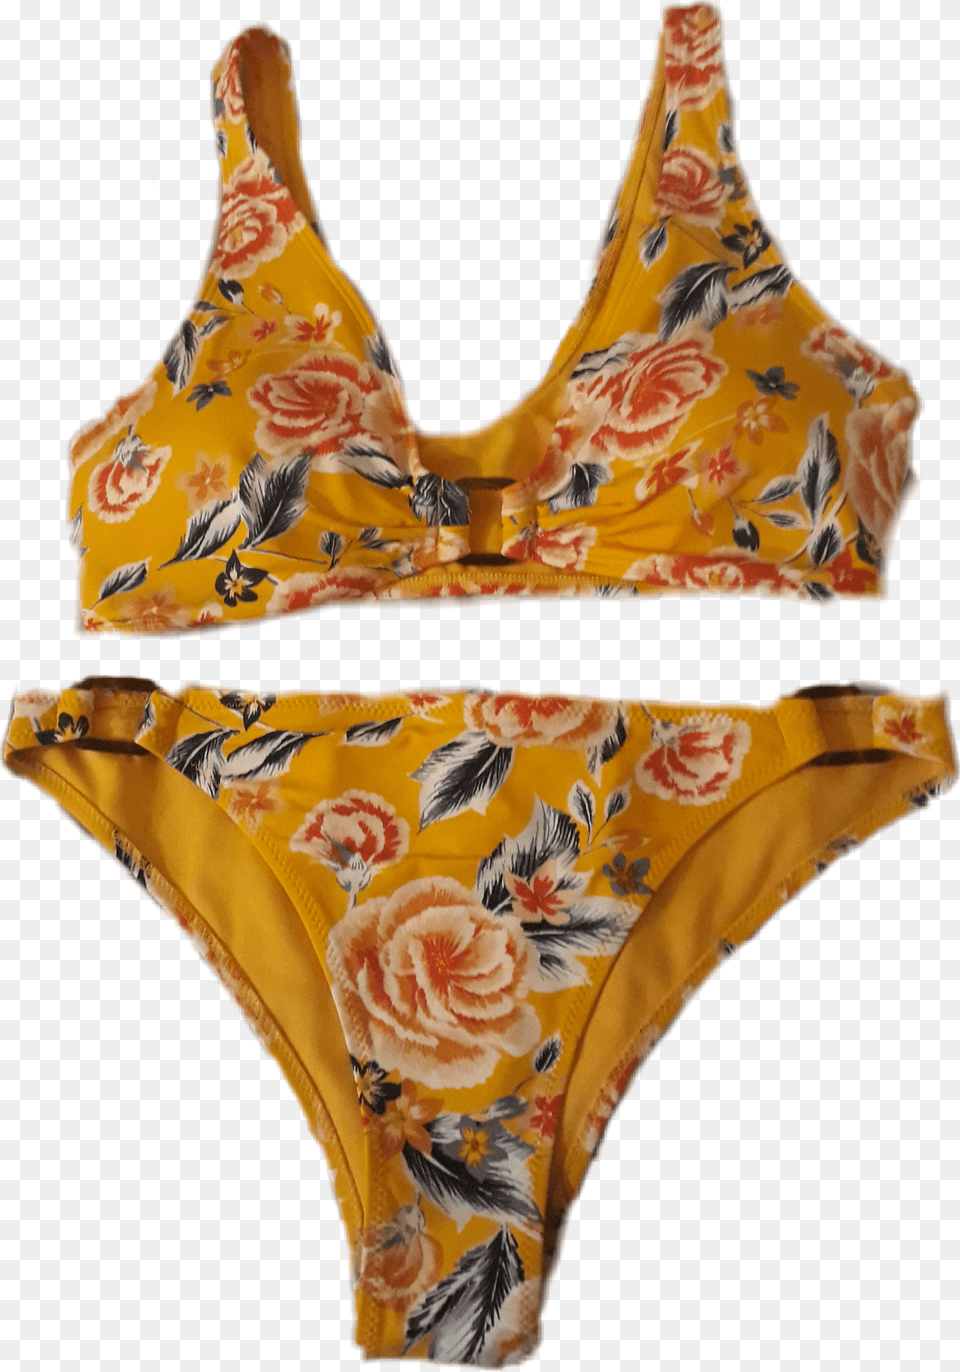 Bikini Bikinis Bikinibottom Bikinitop Yellowbikini Swimsuit Top, Clothing, Swimwear, Underwear, Animal Png